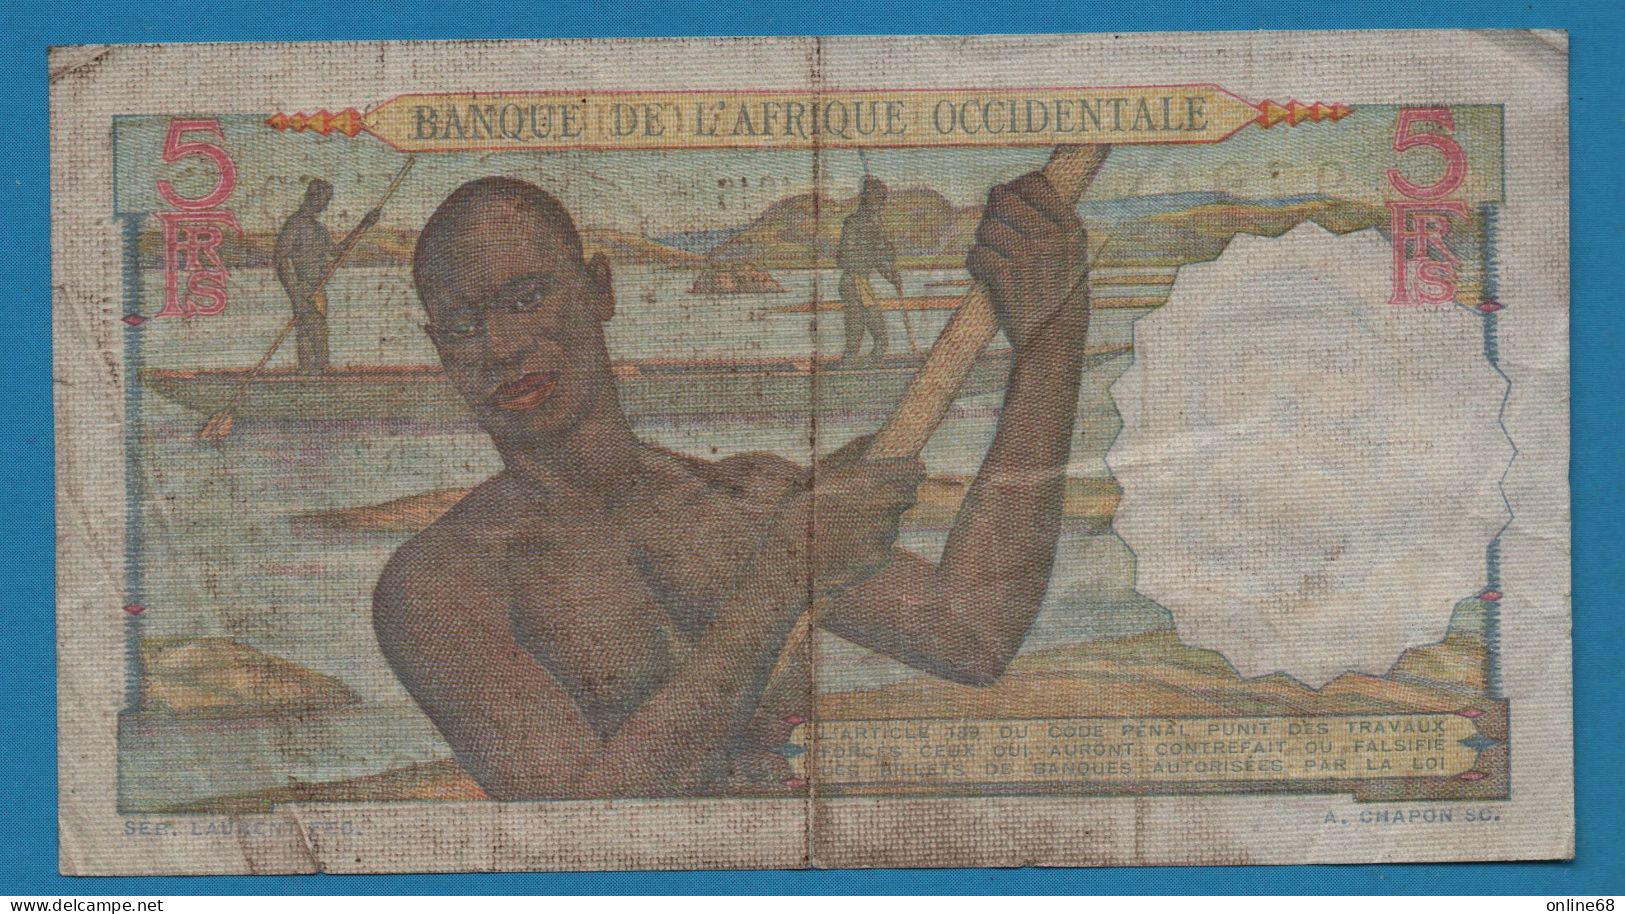 Banque De L'Afrique Occidentale 5 FRANCS 09-03-1948 # T.60 P# 36 FRENCH WEST AFRICA - Other - Africa